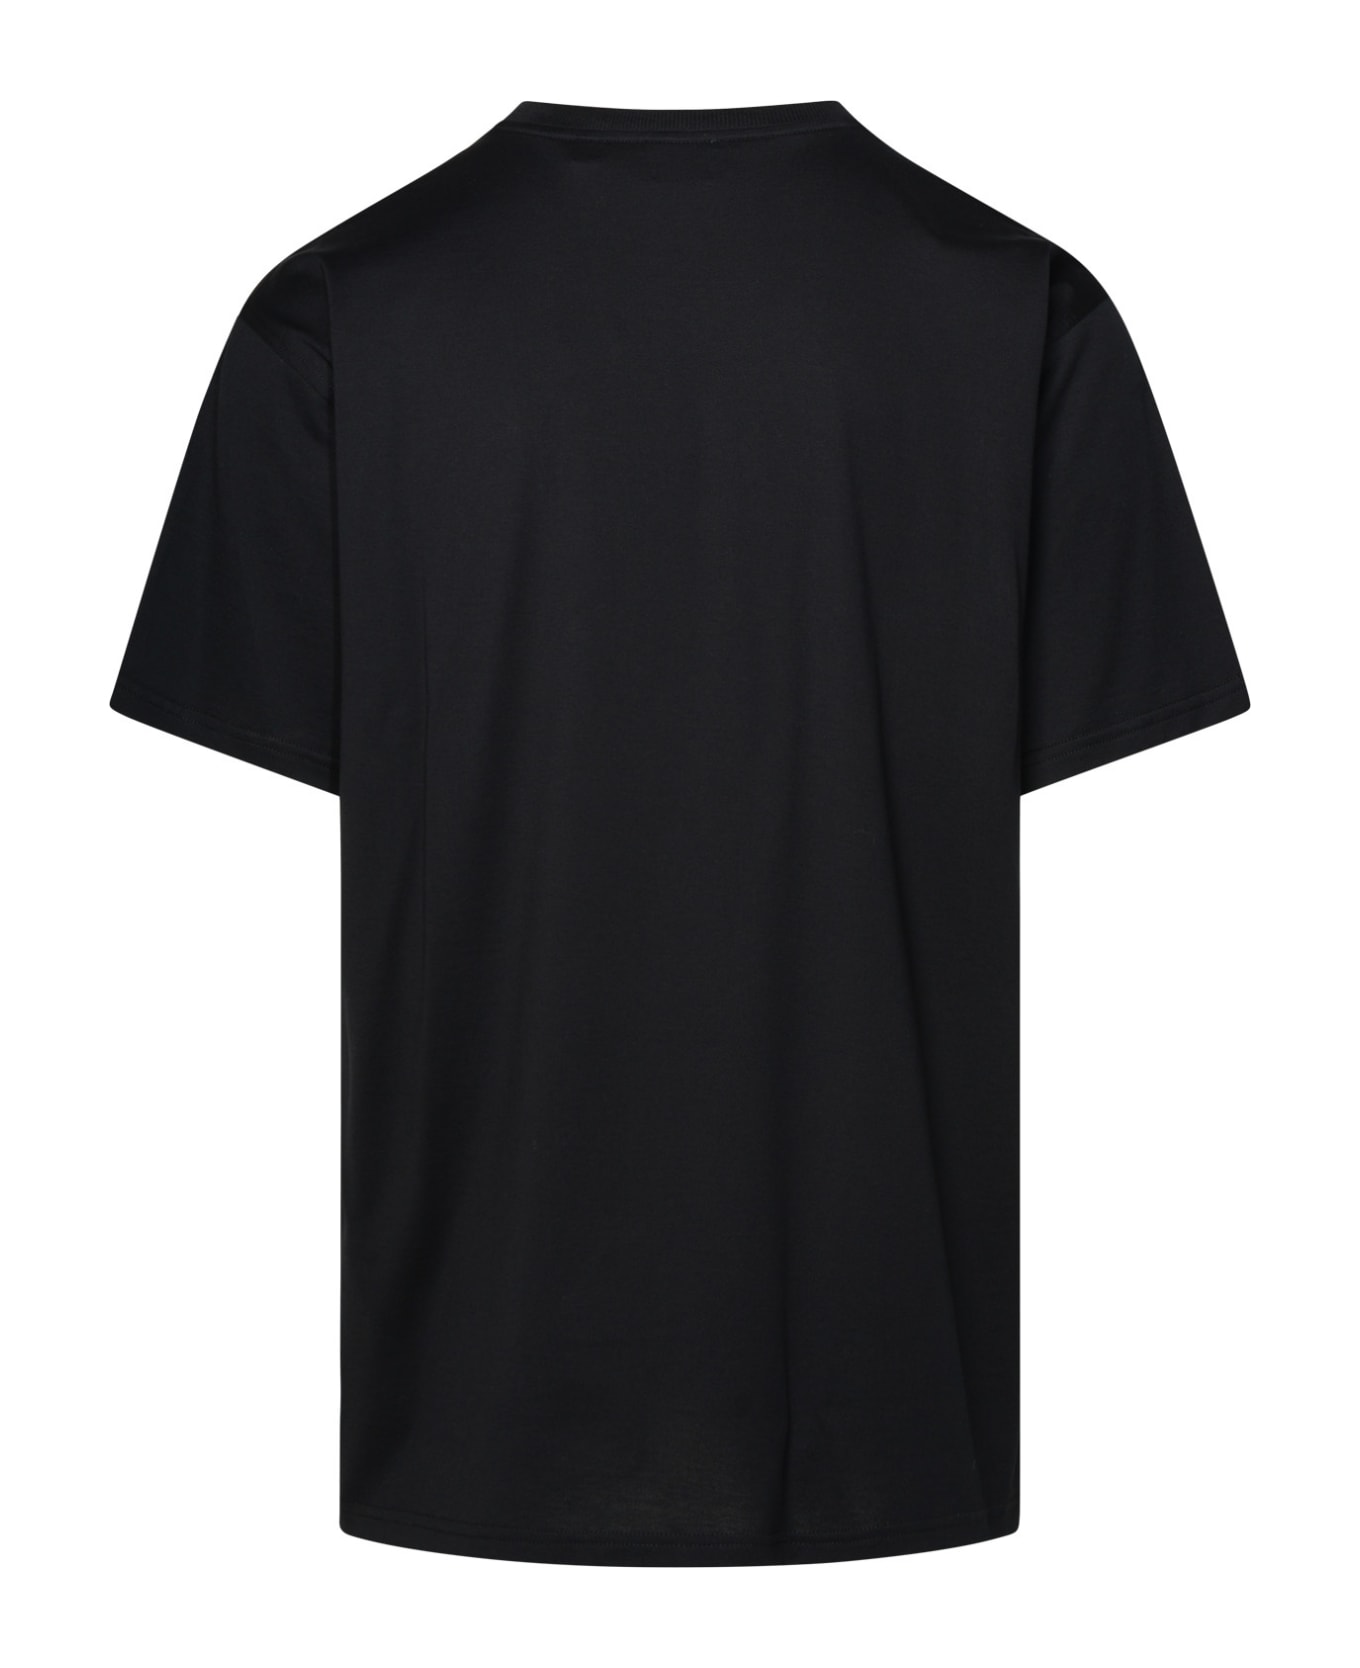 Burberry Black Cotton T-shirt - Black